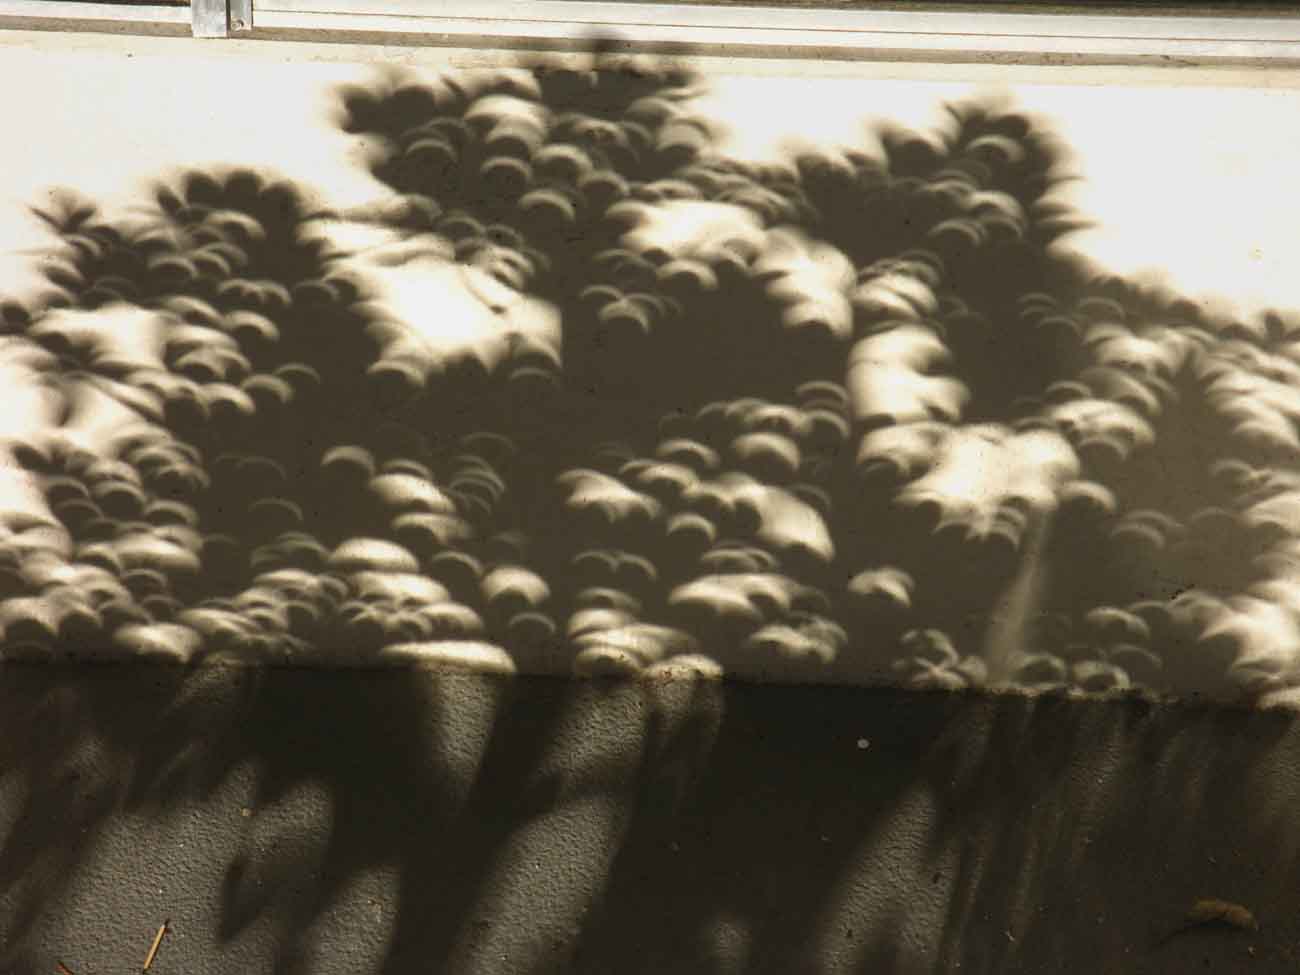 Annular eclipses cast circular shadows.